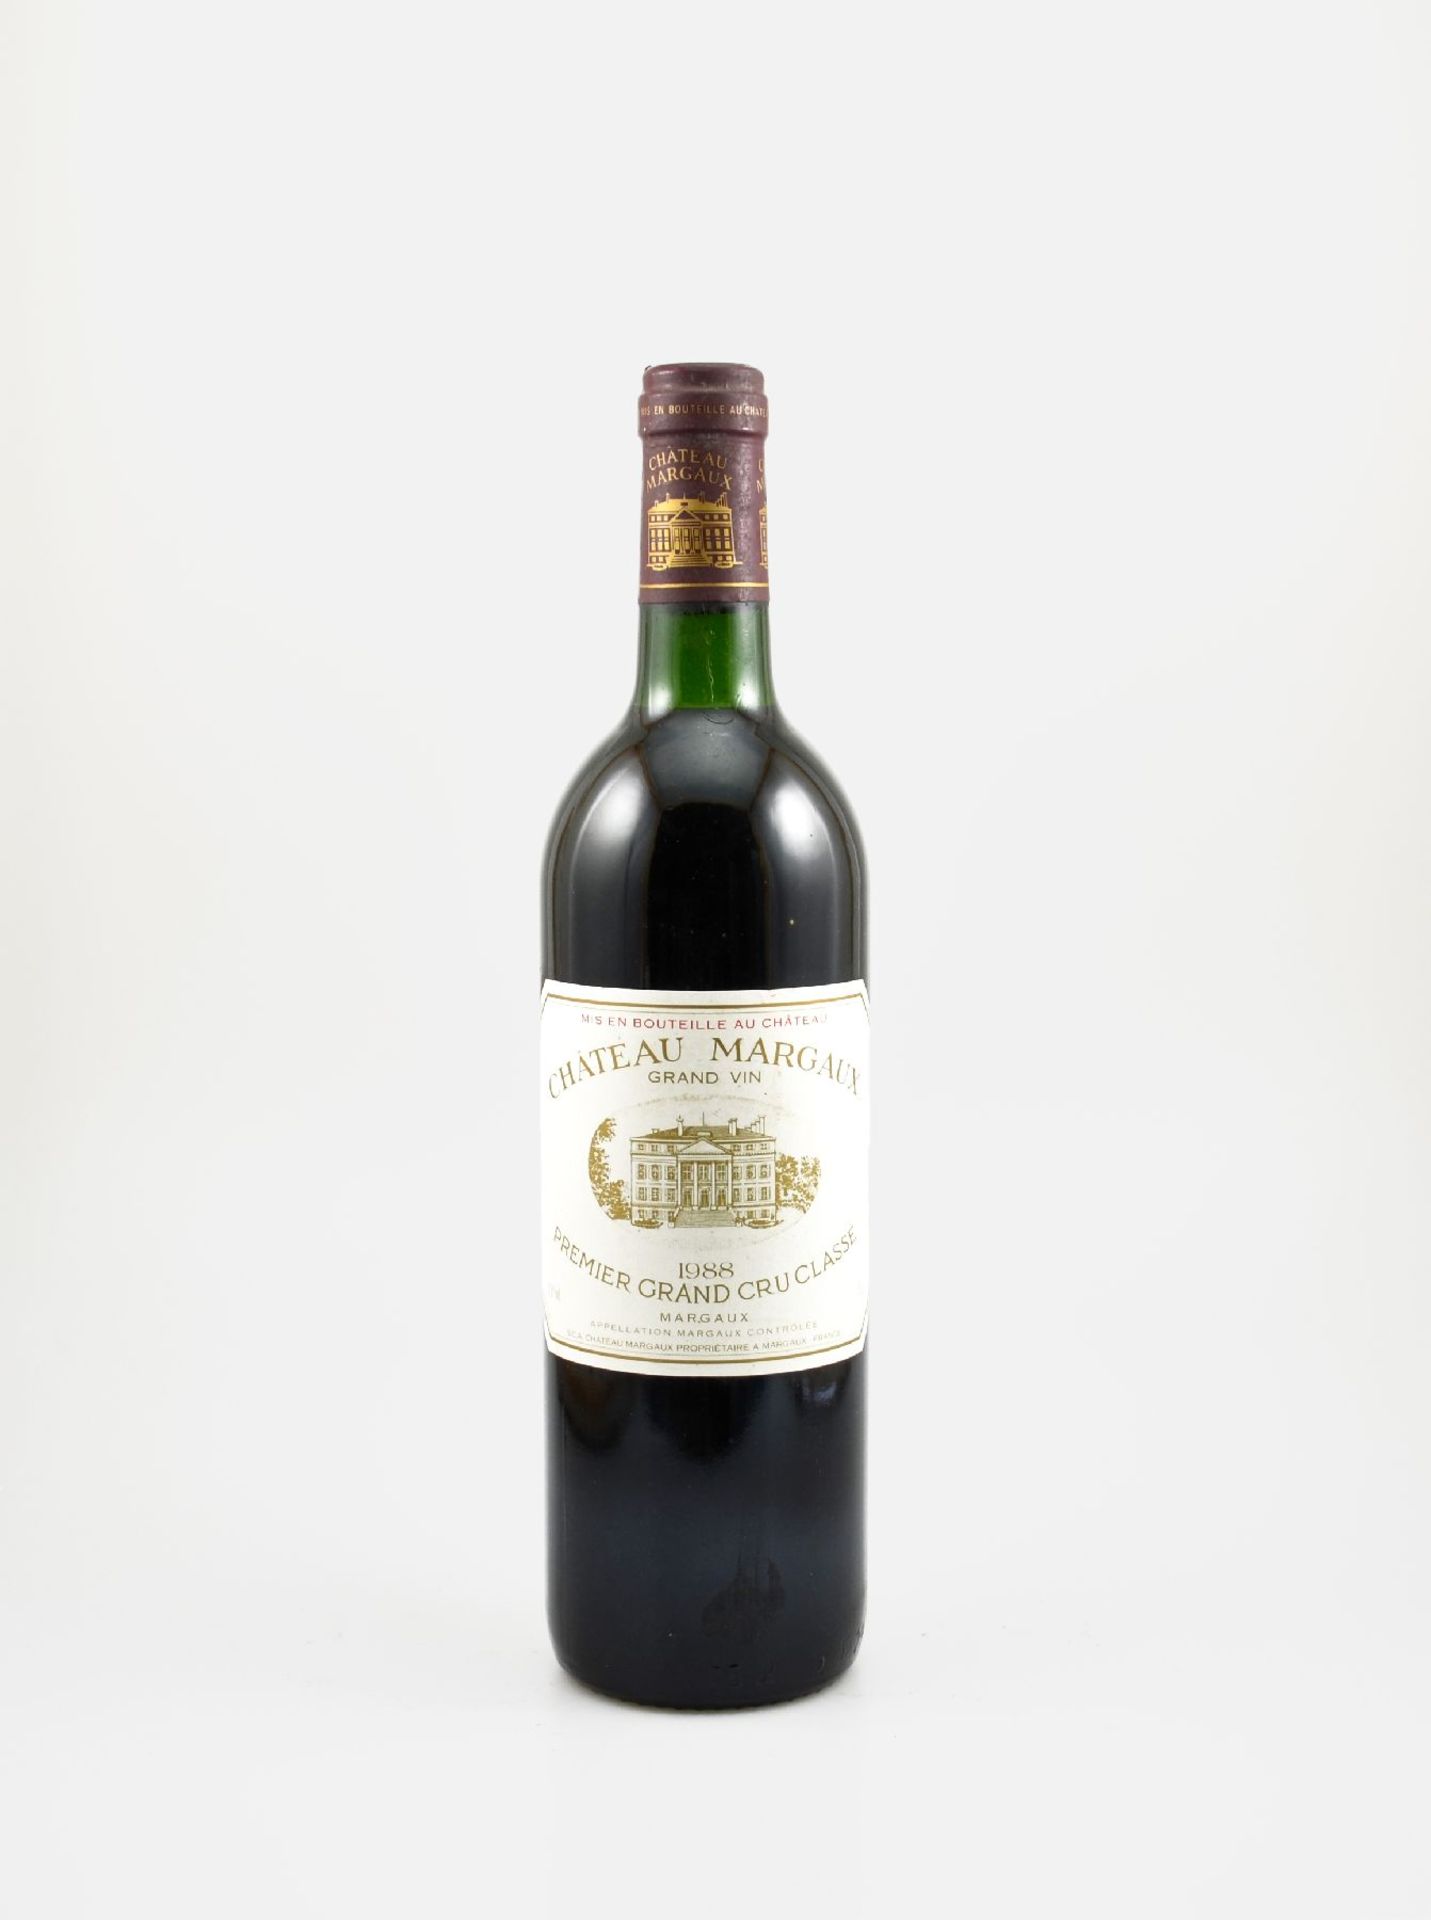 1 bottle 1988 Chateau Margaux, Margaux, Premier Grand Cru Classe, approx 75 cl, 12,5 % Vol.,